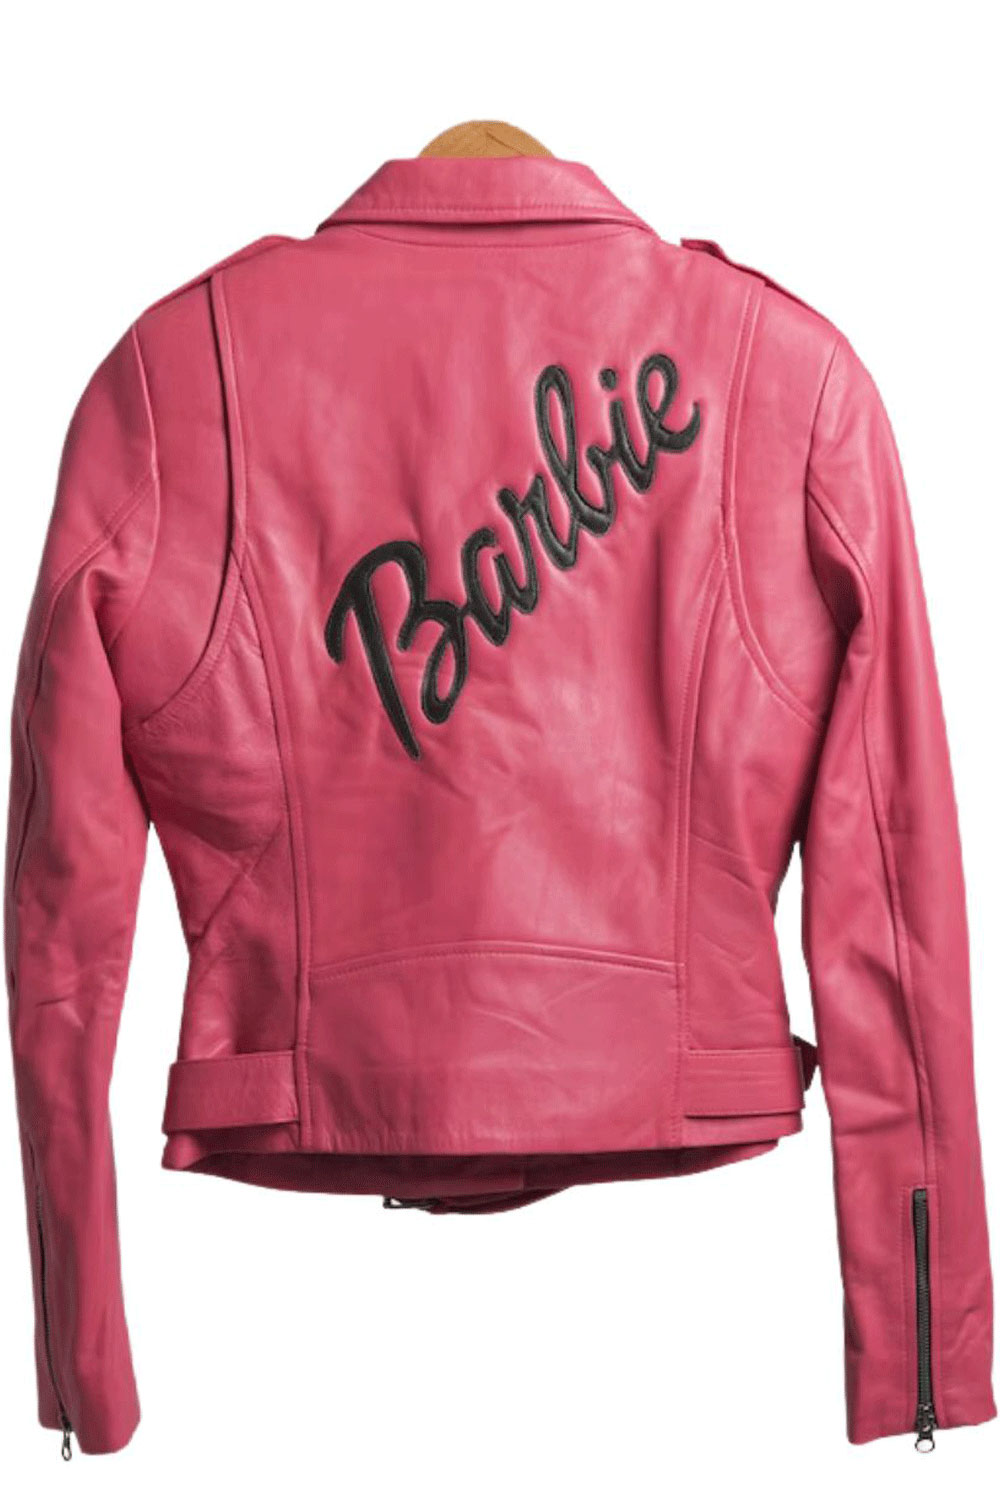 barbie-movie-pink-leather-jacket